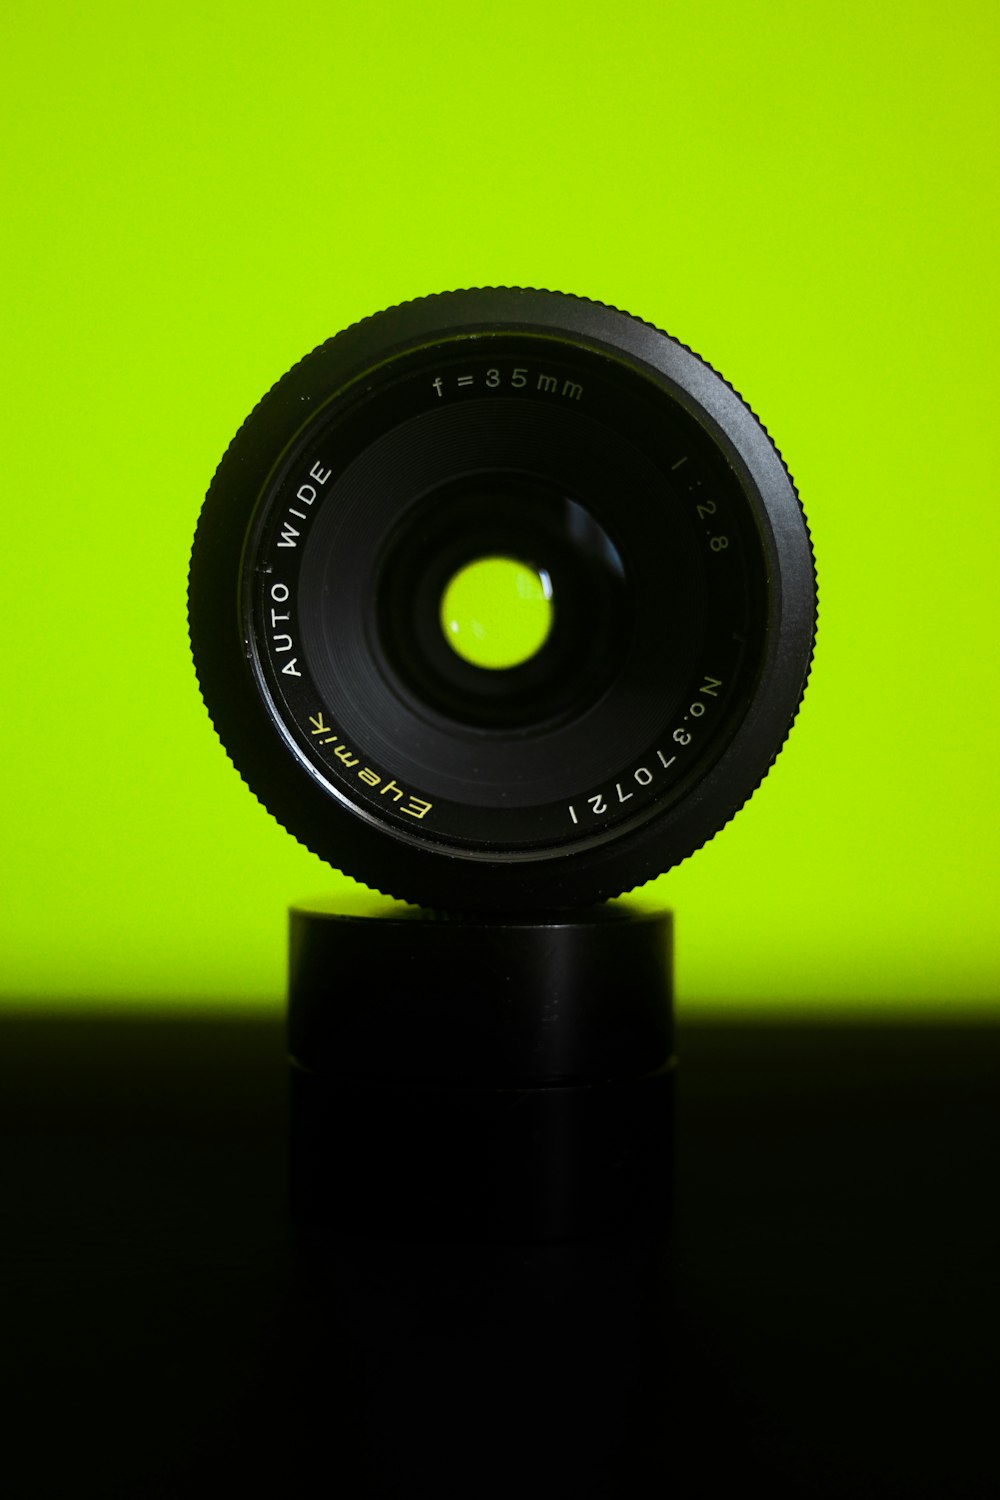 black camera lens on yellow background